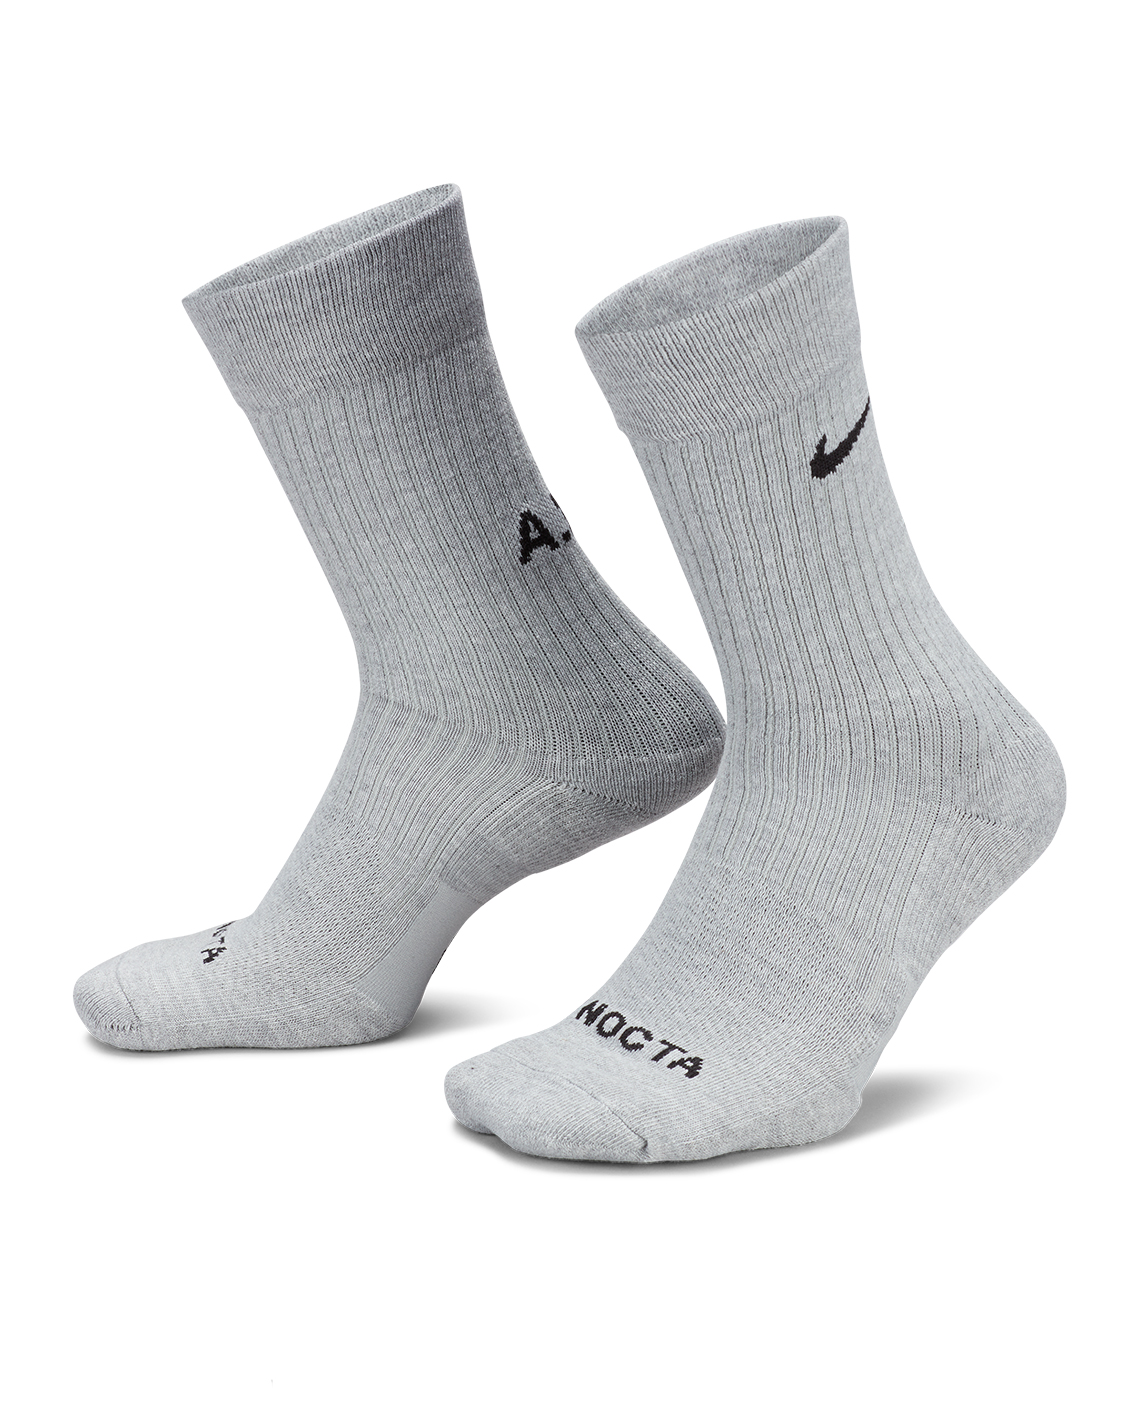 Dd9240 902 Nike super Nocta Distant Regards Socks